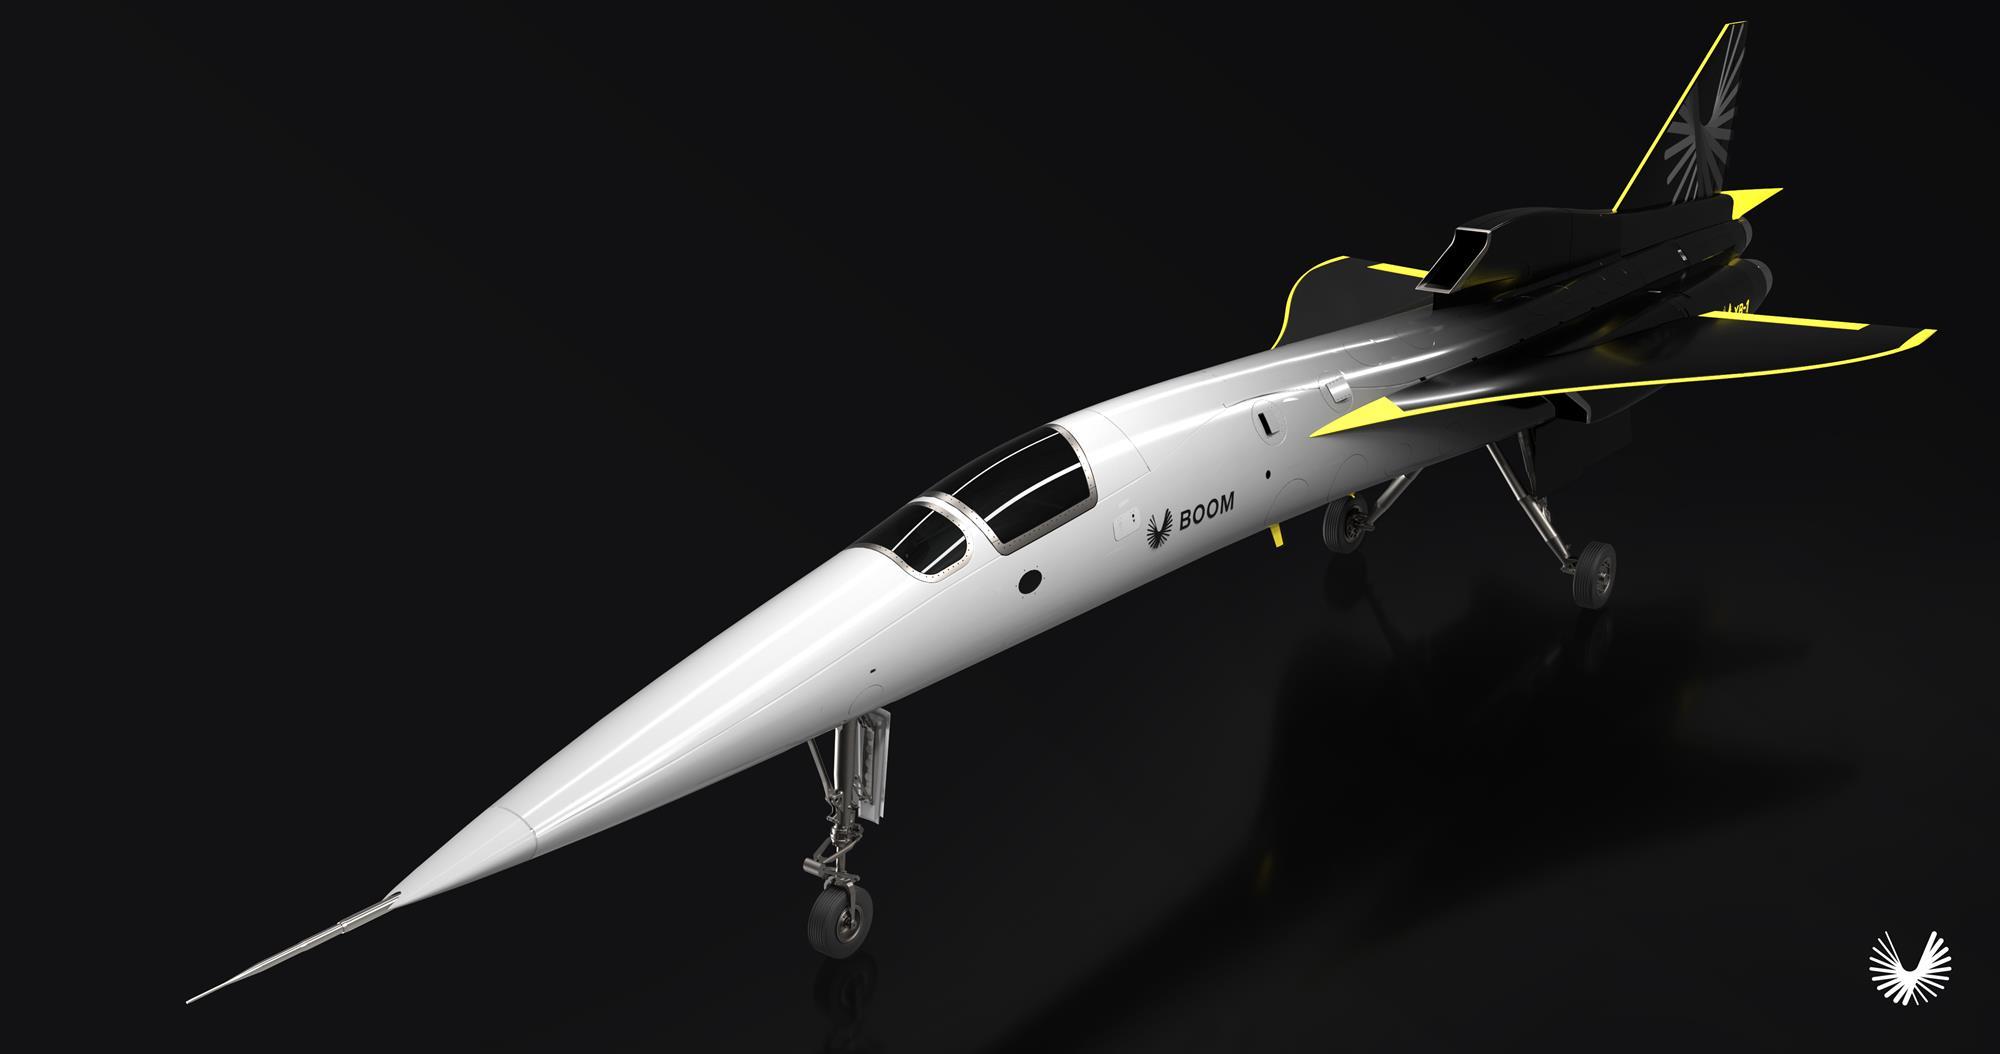 Honeywell to supply avionics for Boom Supersonic aircraft